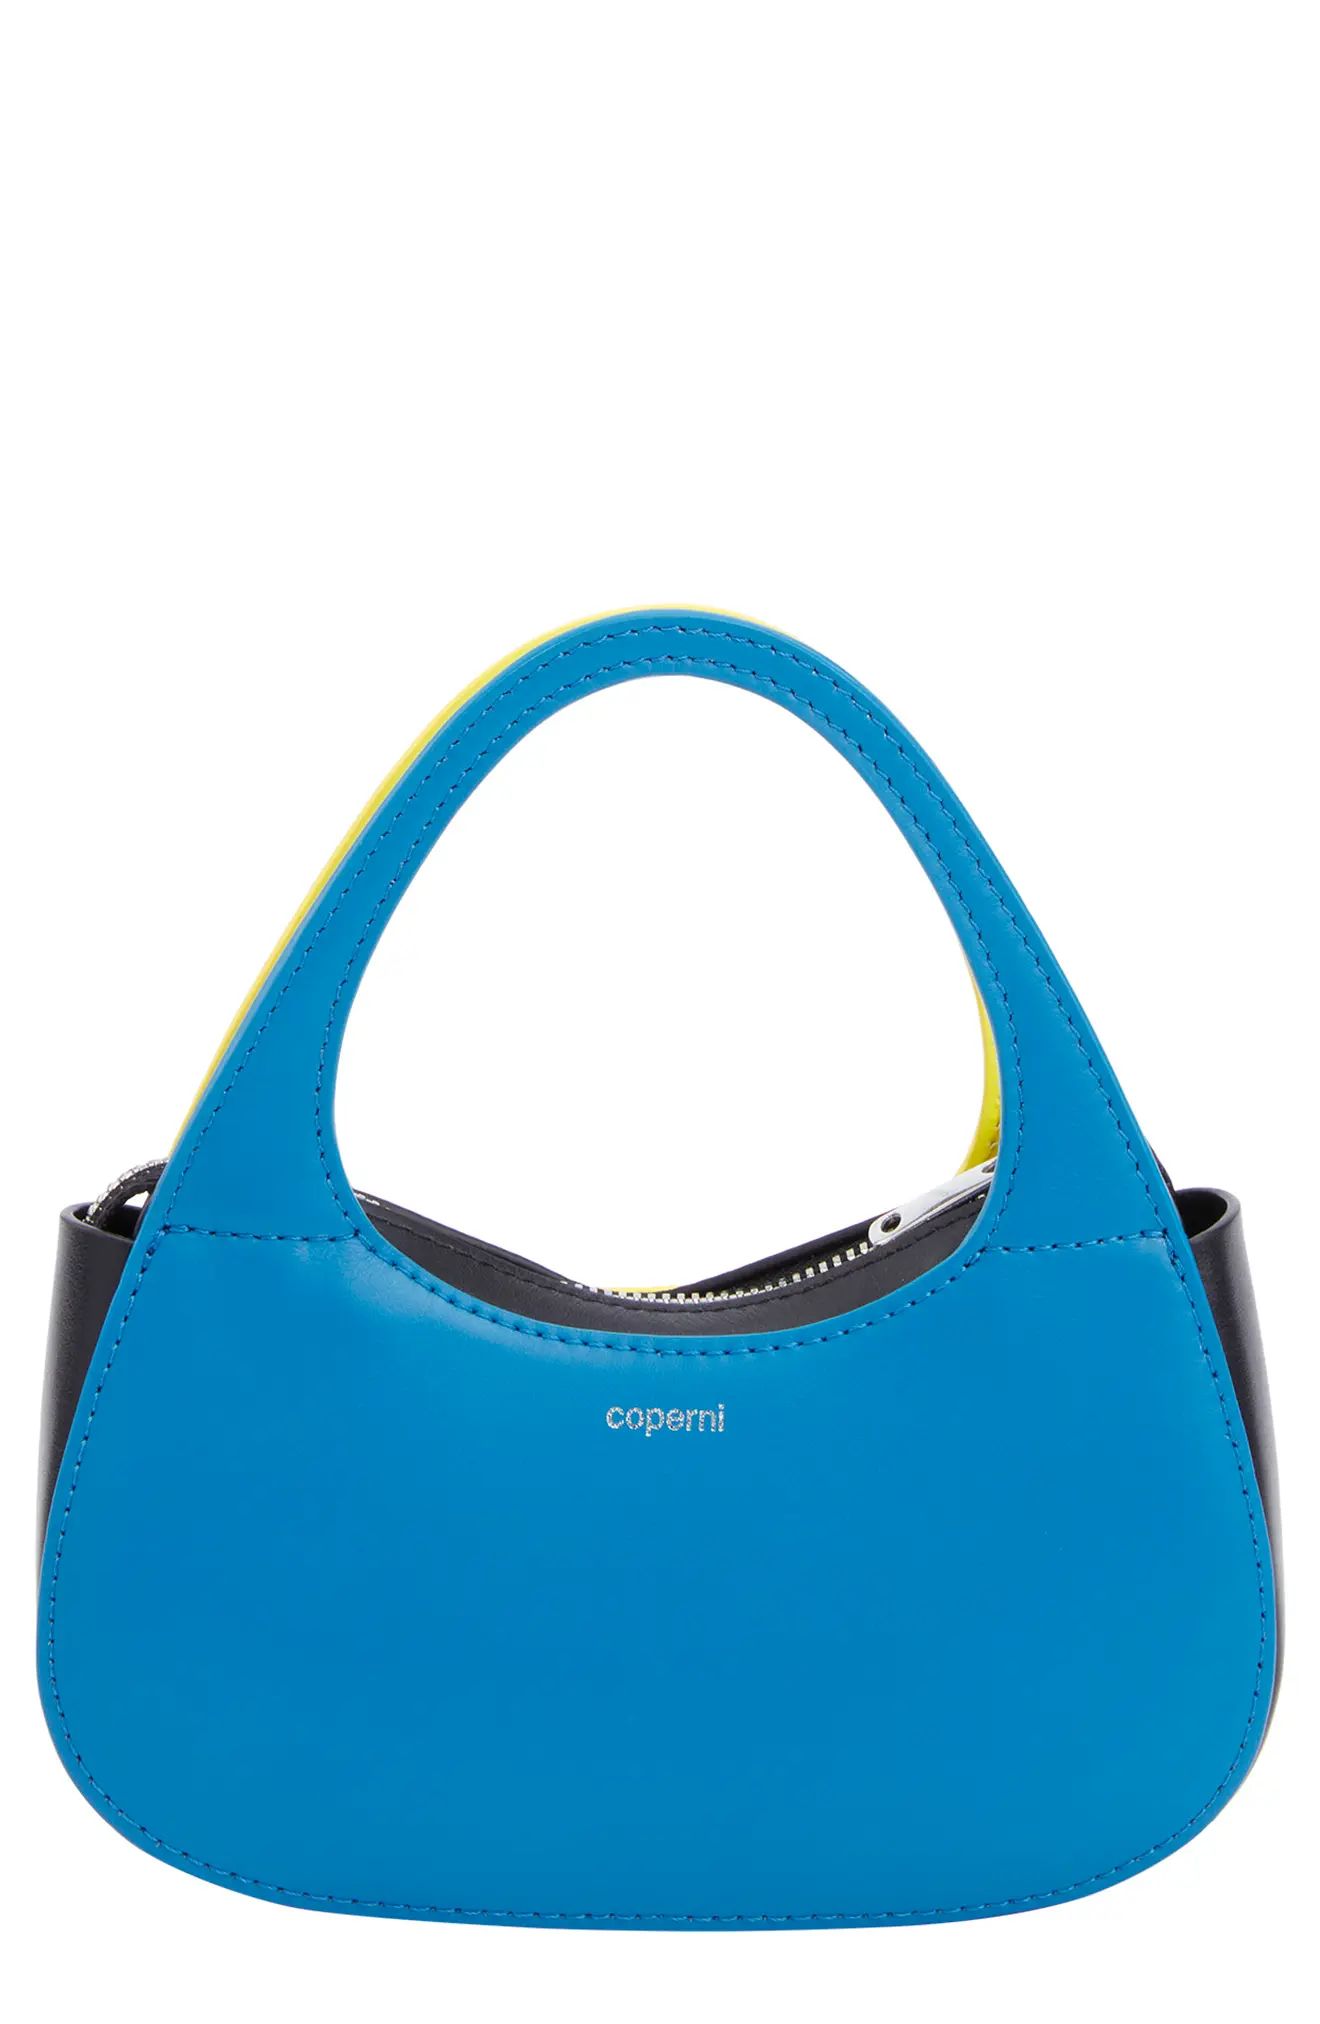 Coperni Micro Swipe Baguette Neon Colorblock Leather Top Handle Bag in Neon Yellow /Blue at Nordstro | Nordstrom